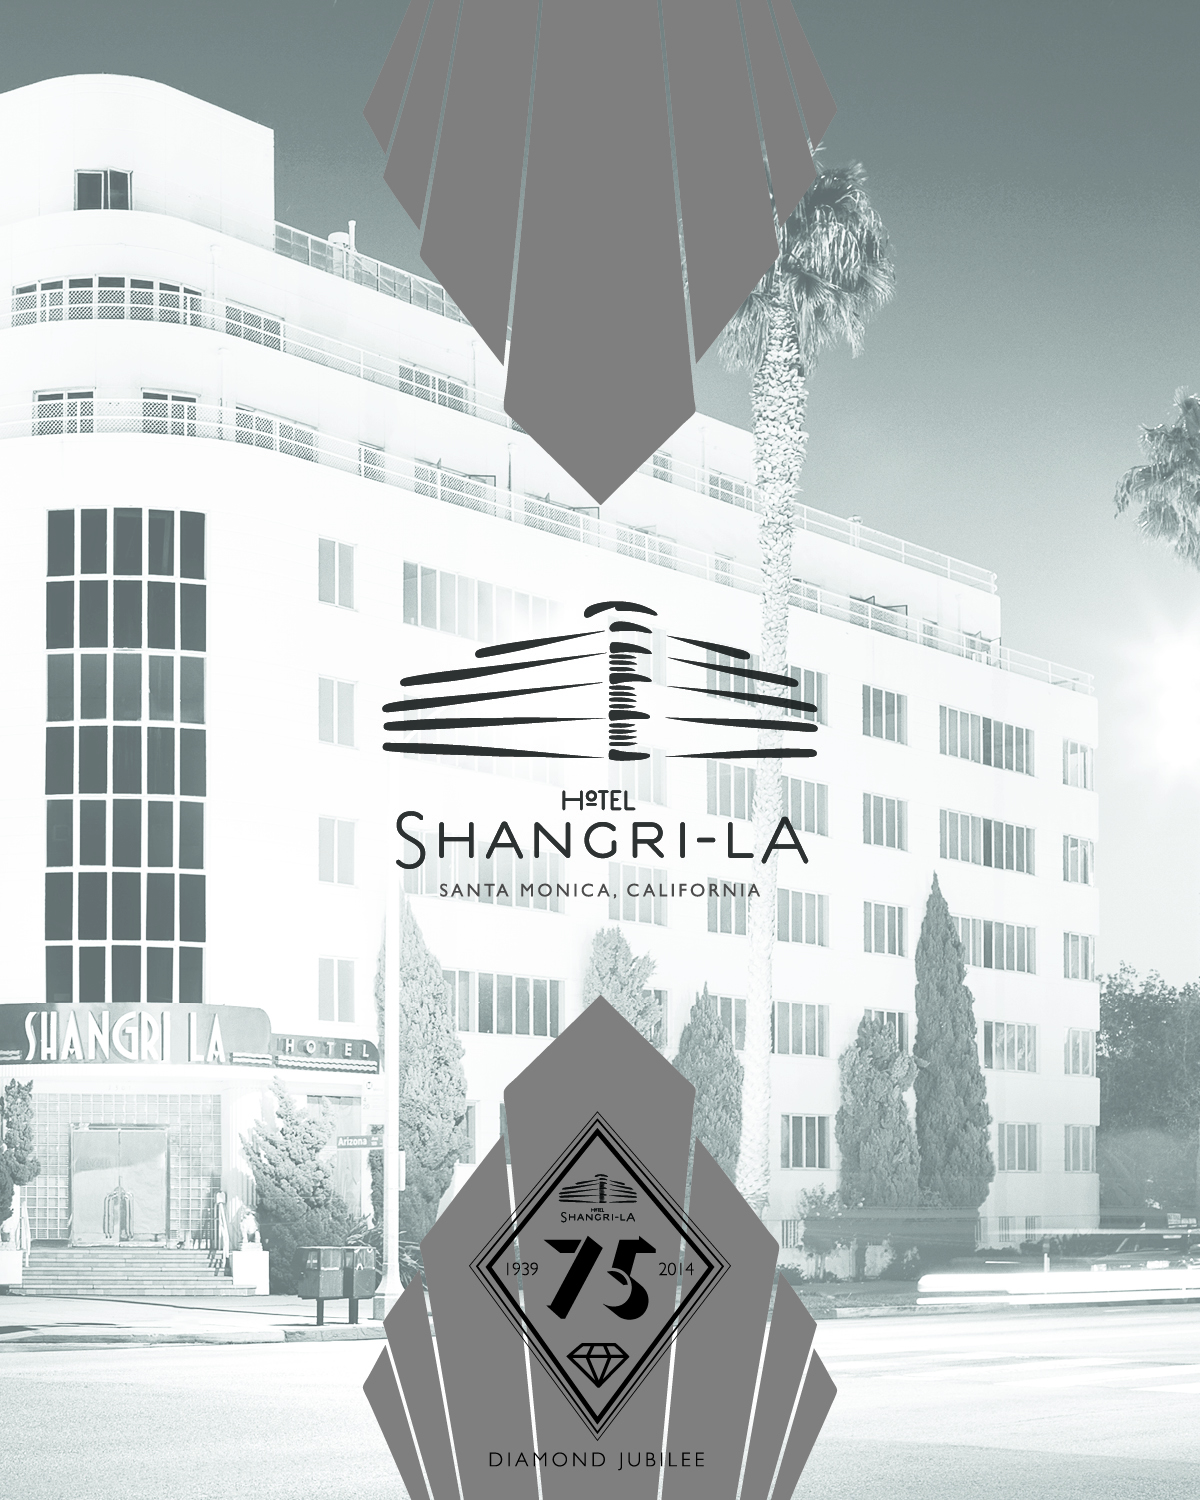 Tamie Adaya's newly published Hotel Shangri-la diamond anniversary book